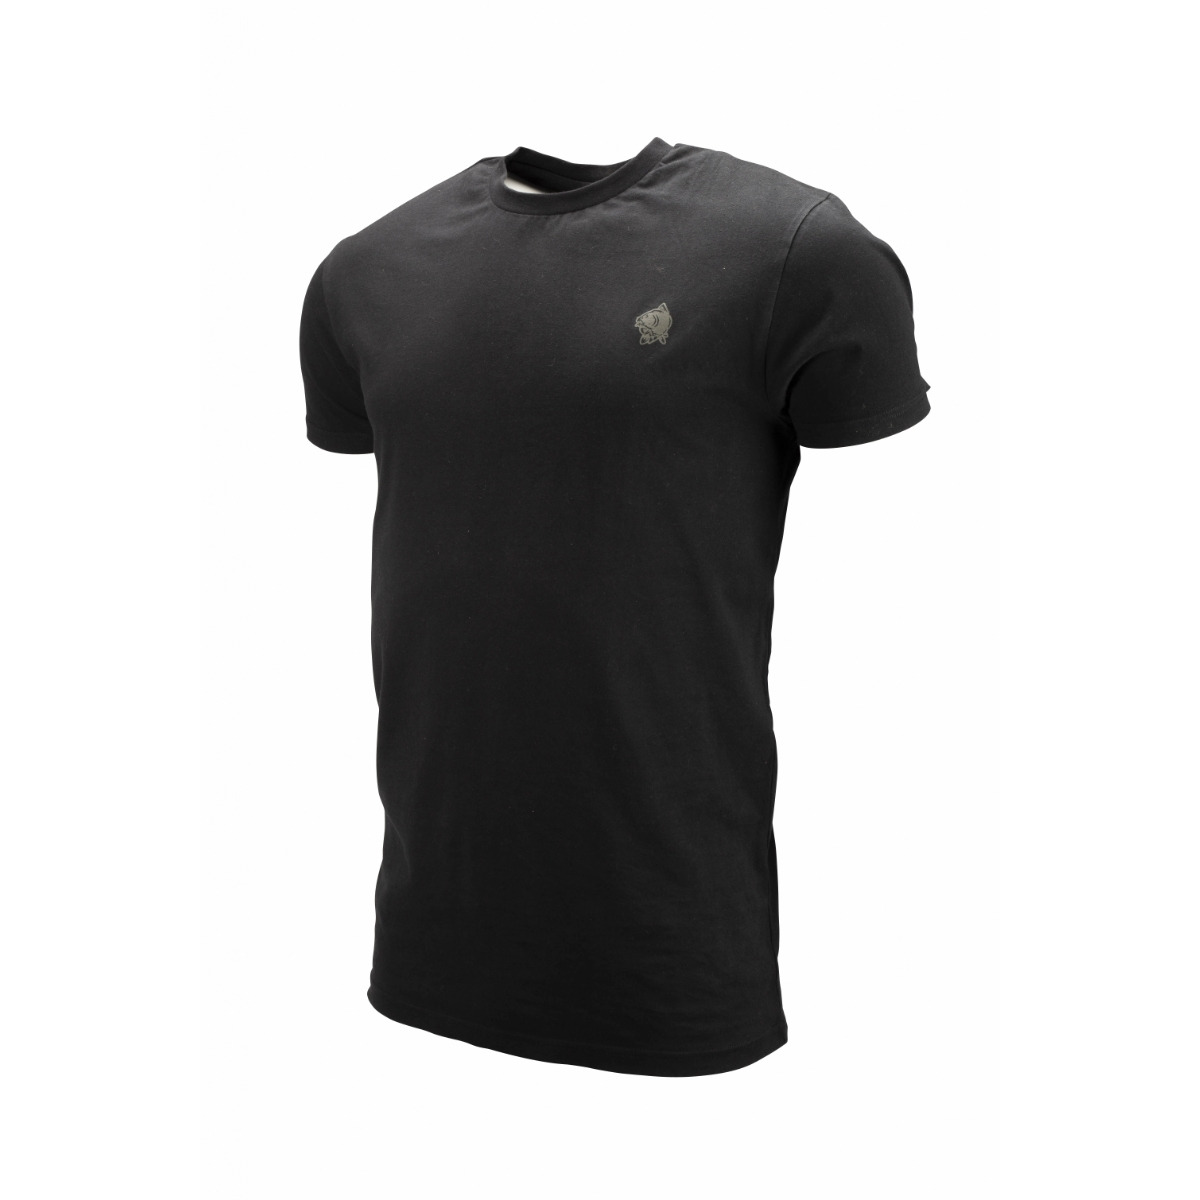 Nash Tackle T-shirt Black - XL